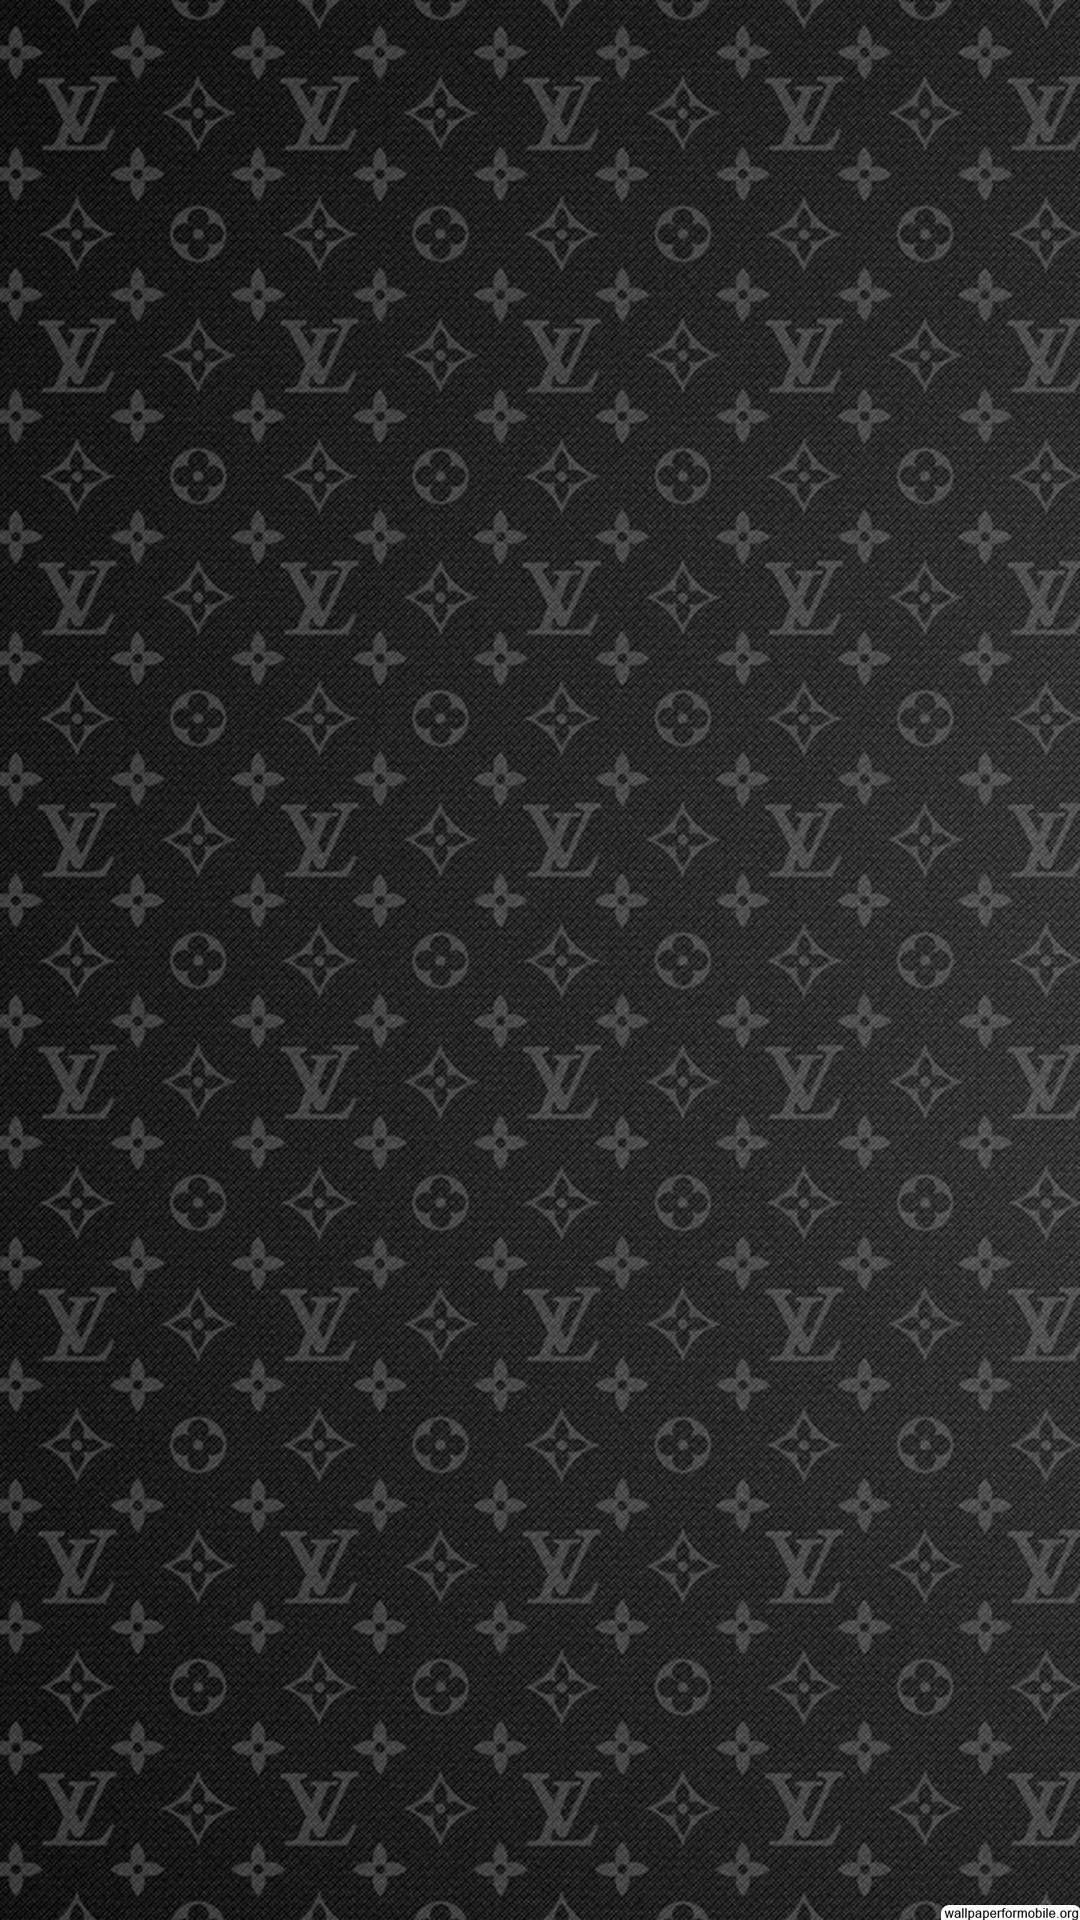 Vuitton Background  Hypebeast wallpaper, Iphone background wallpaper, Apple  watch wallpaper